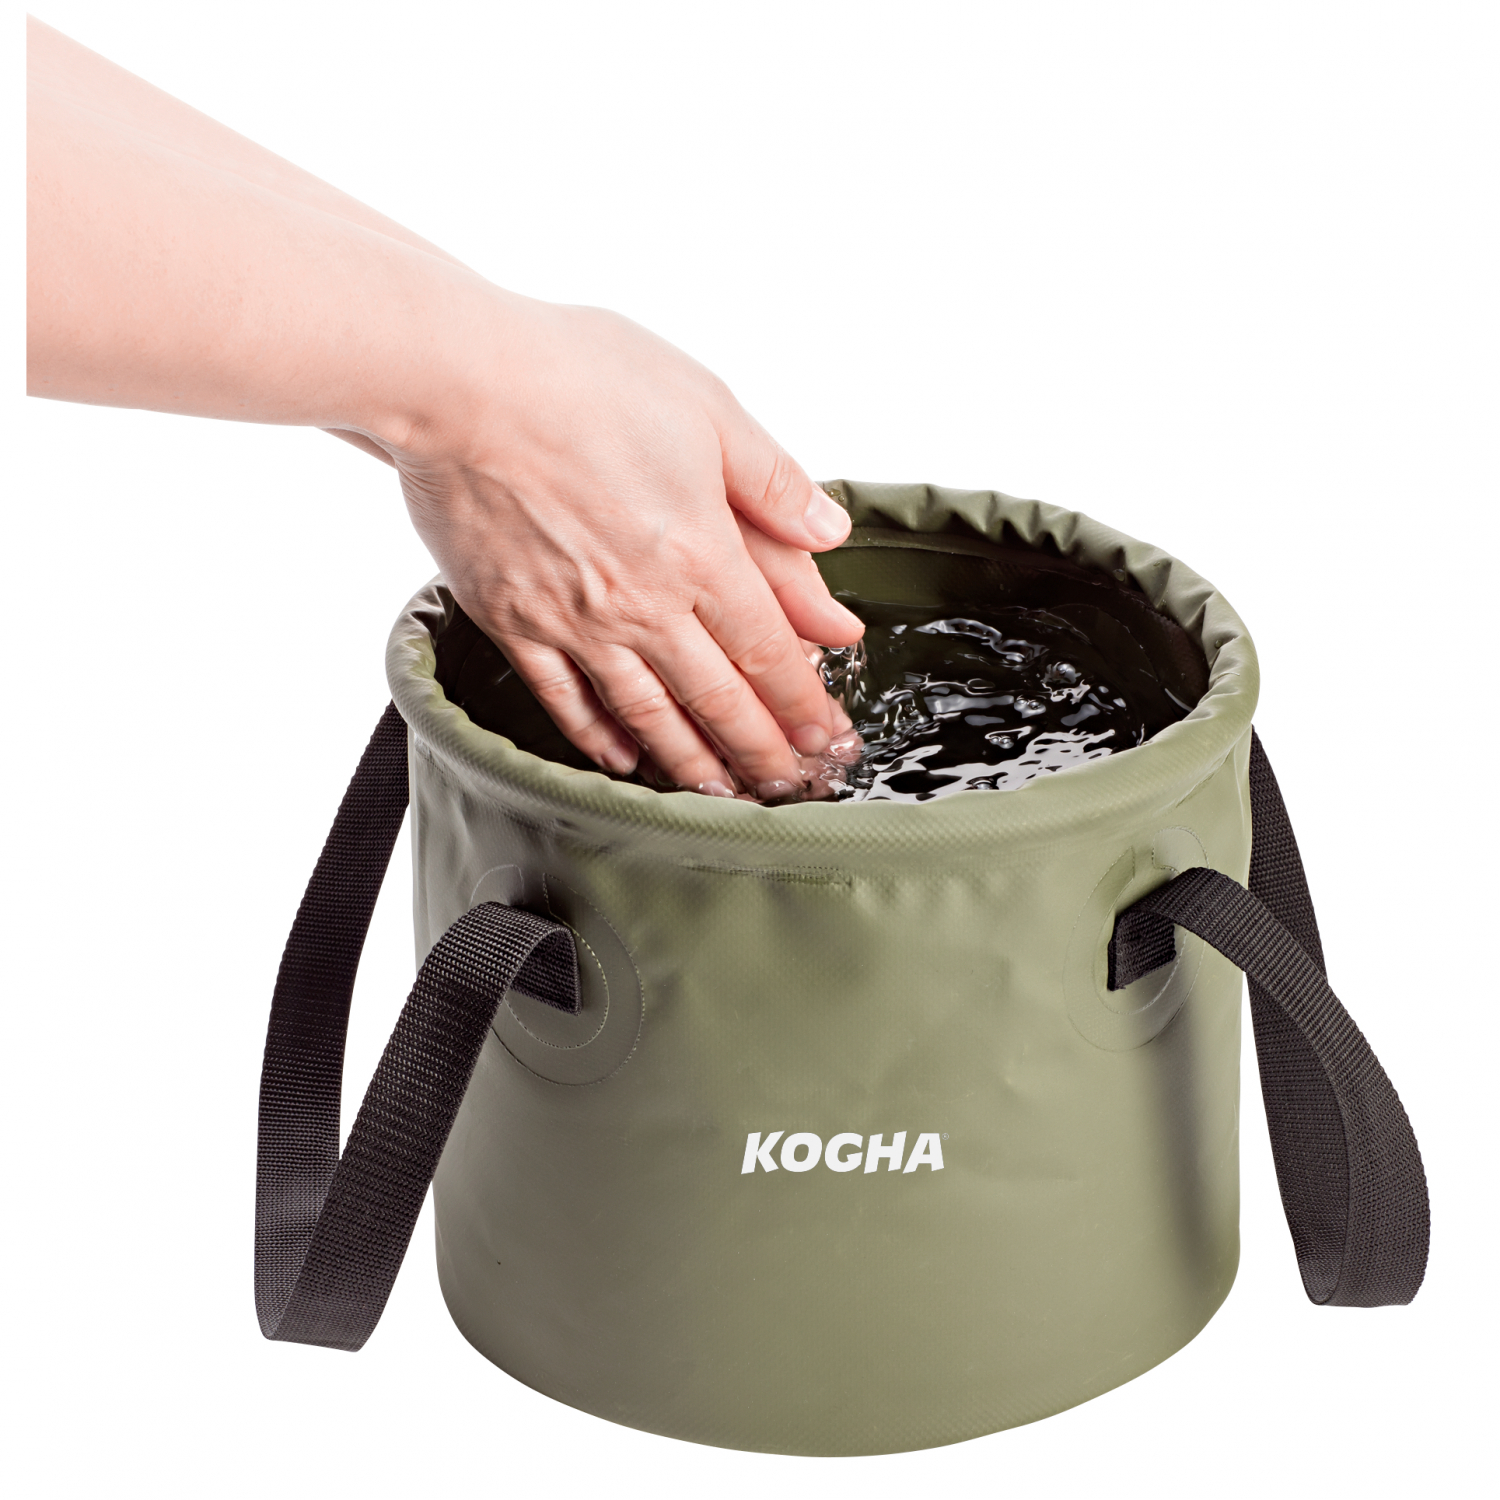 https://images.askari-sport.com/en/product/1/large/kogha-foldable-bucket-multi-use-1705997102.jpg